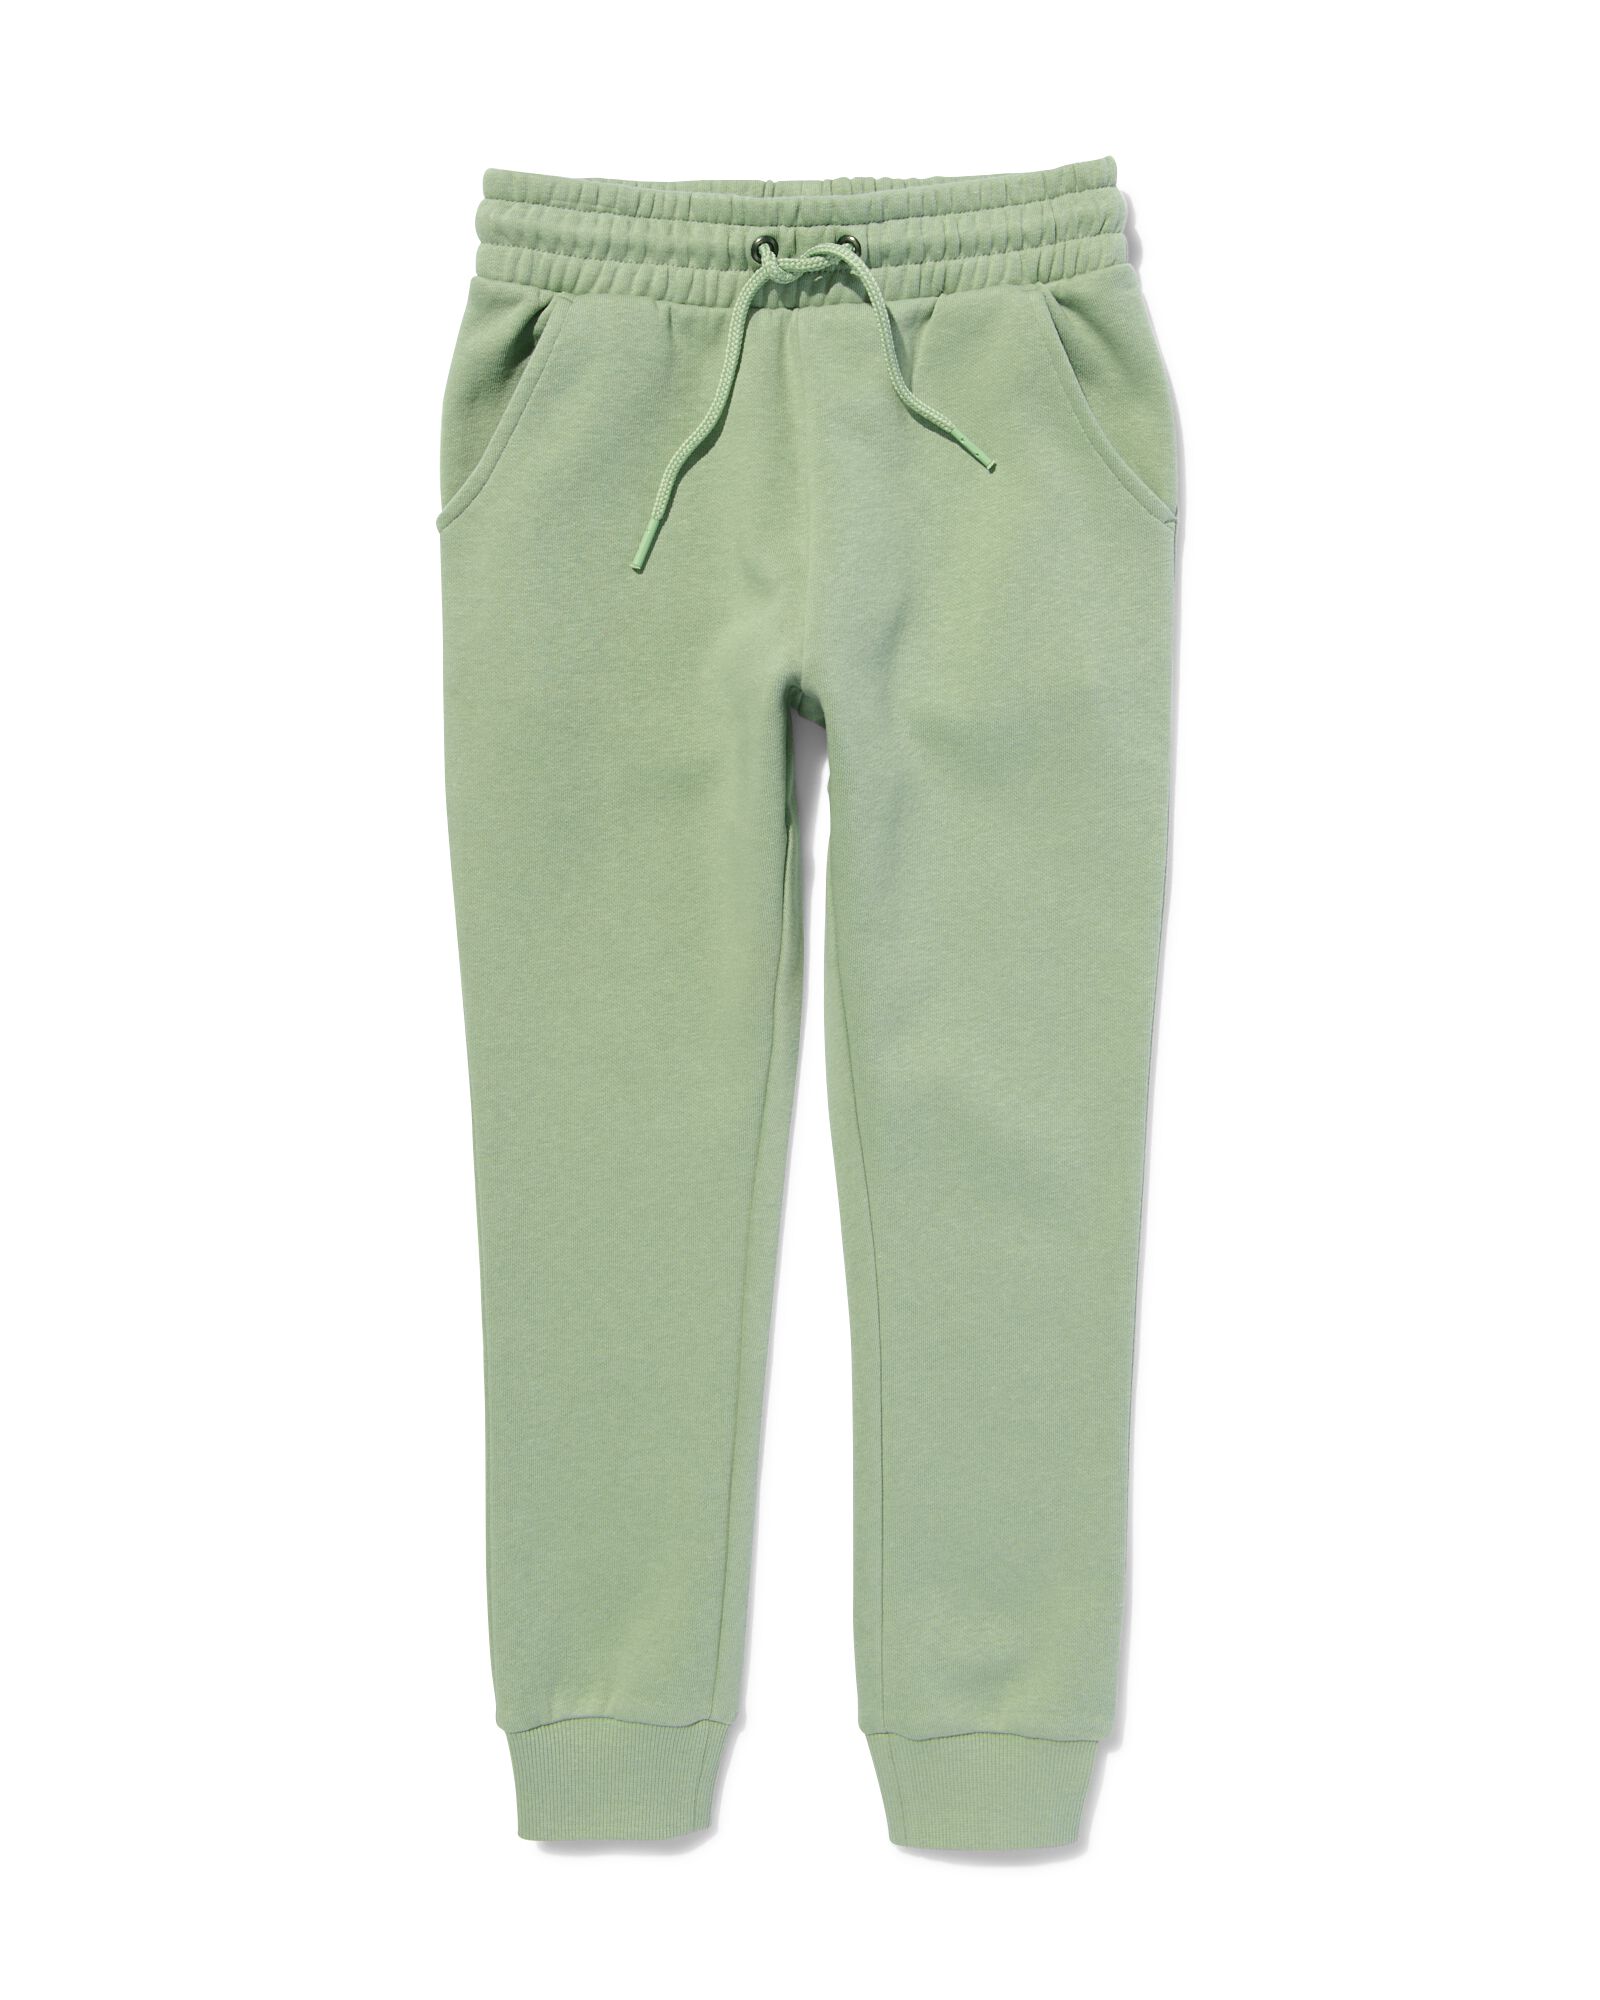 pantalon sweat enfant vert vert - 1000032264 - HEMA